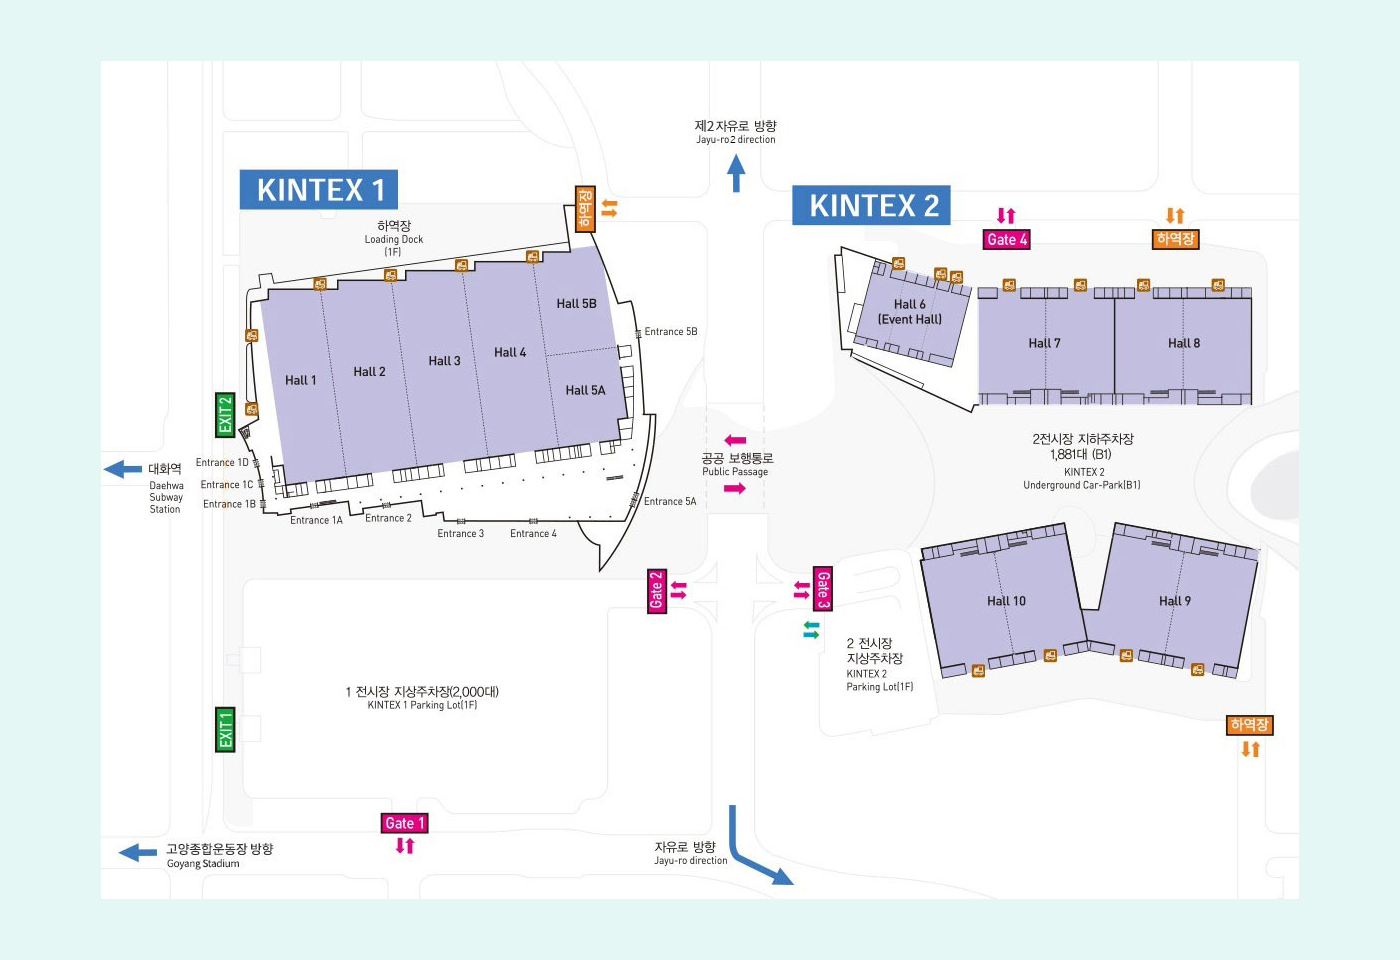 Venue (KINTEX Exhibition Center) Layout